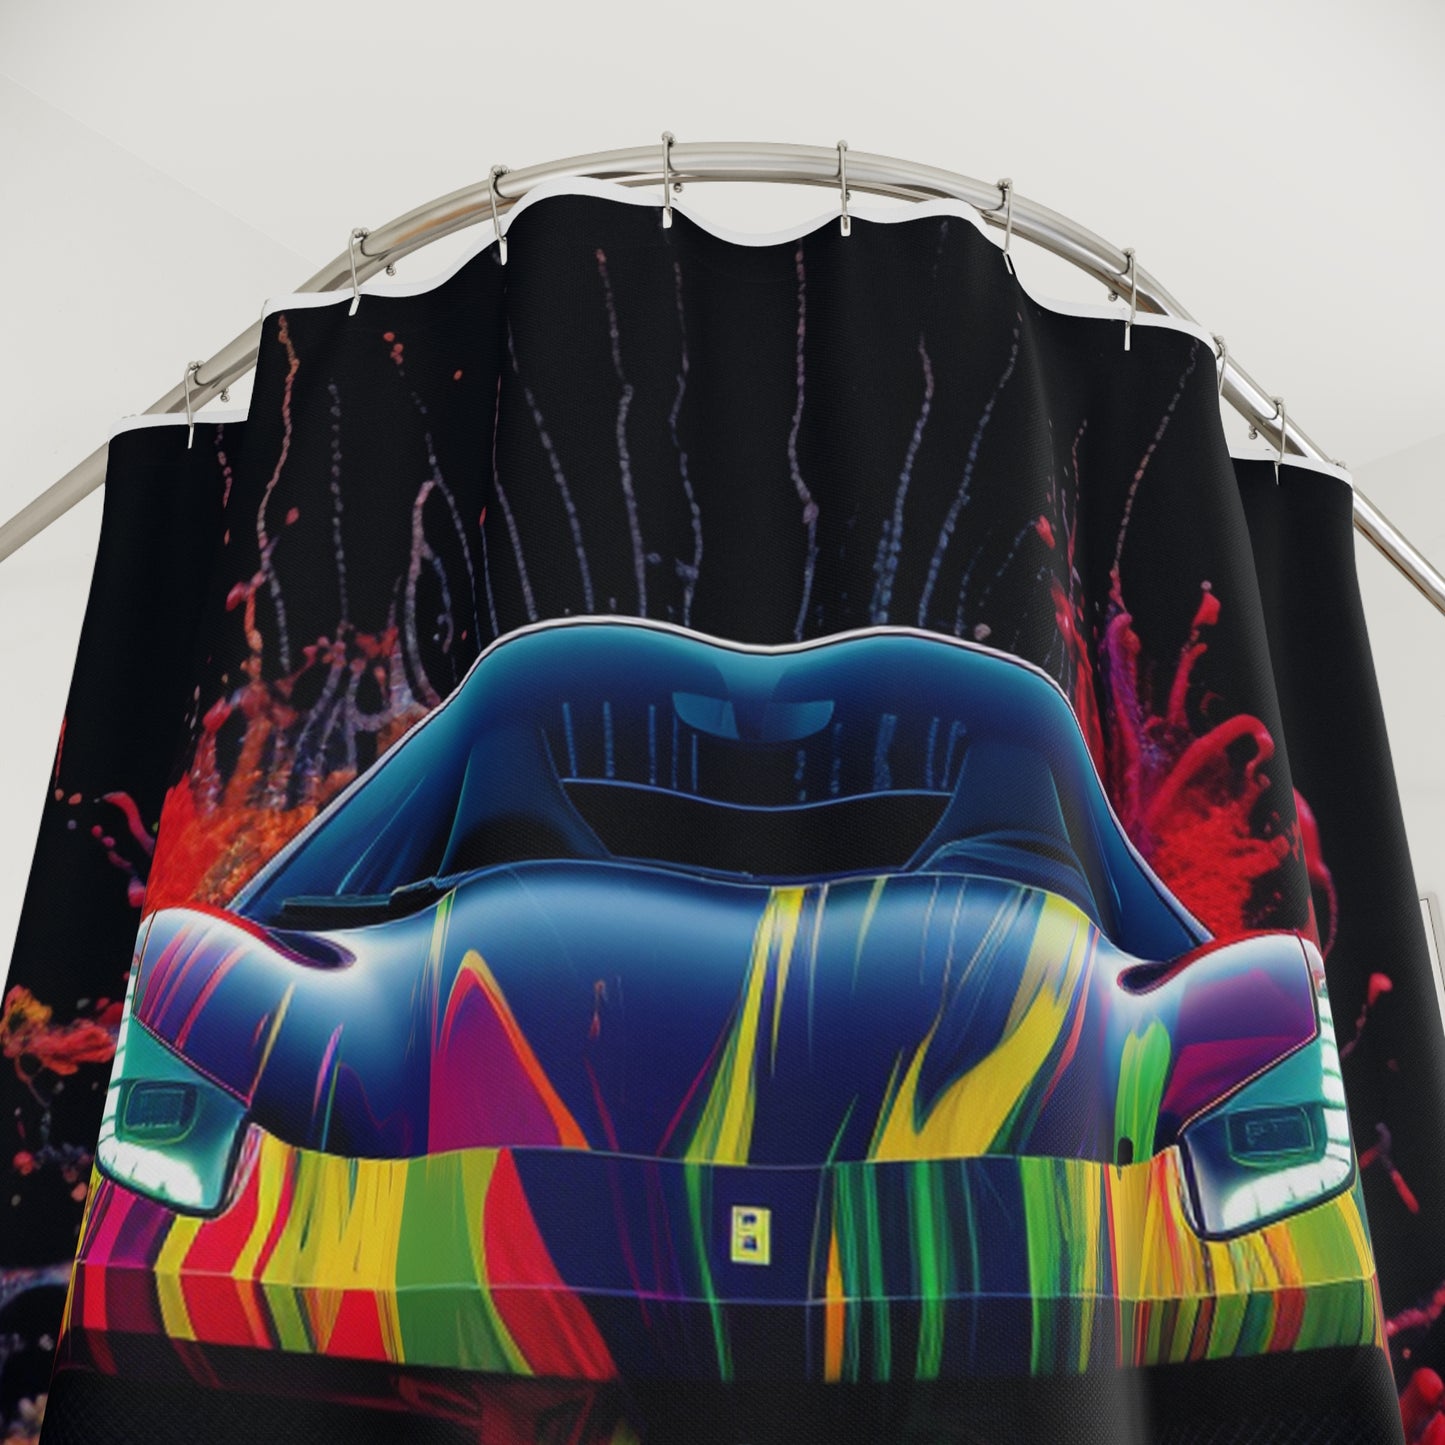 Polyester Shower Curtain Ferrari Fusion Water 1